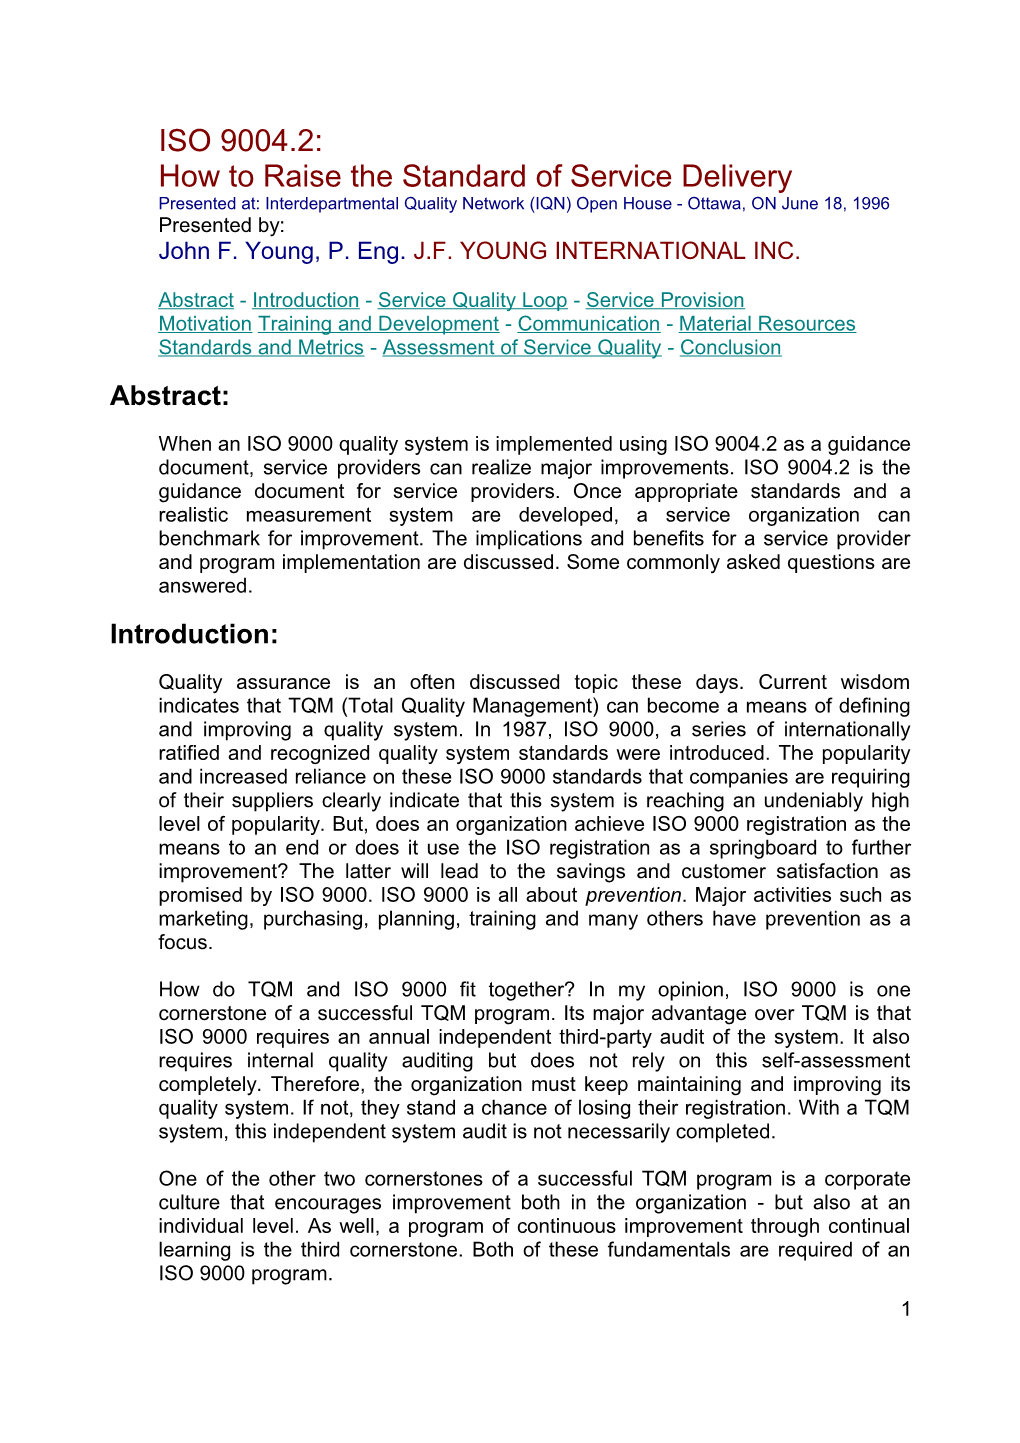 John F. Young, P. Eng.J.F. YOUNG INTERNATIONAL INC